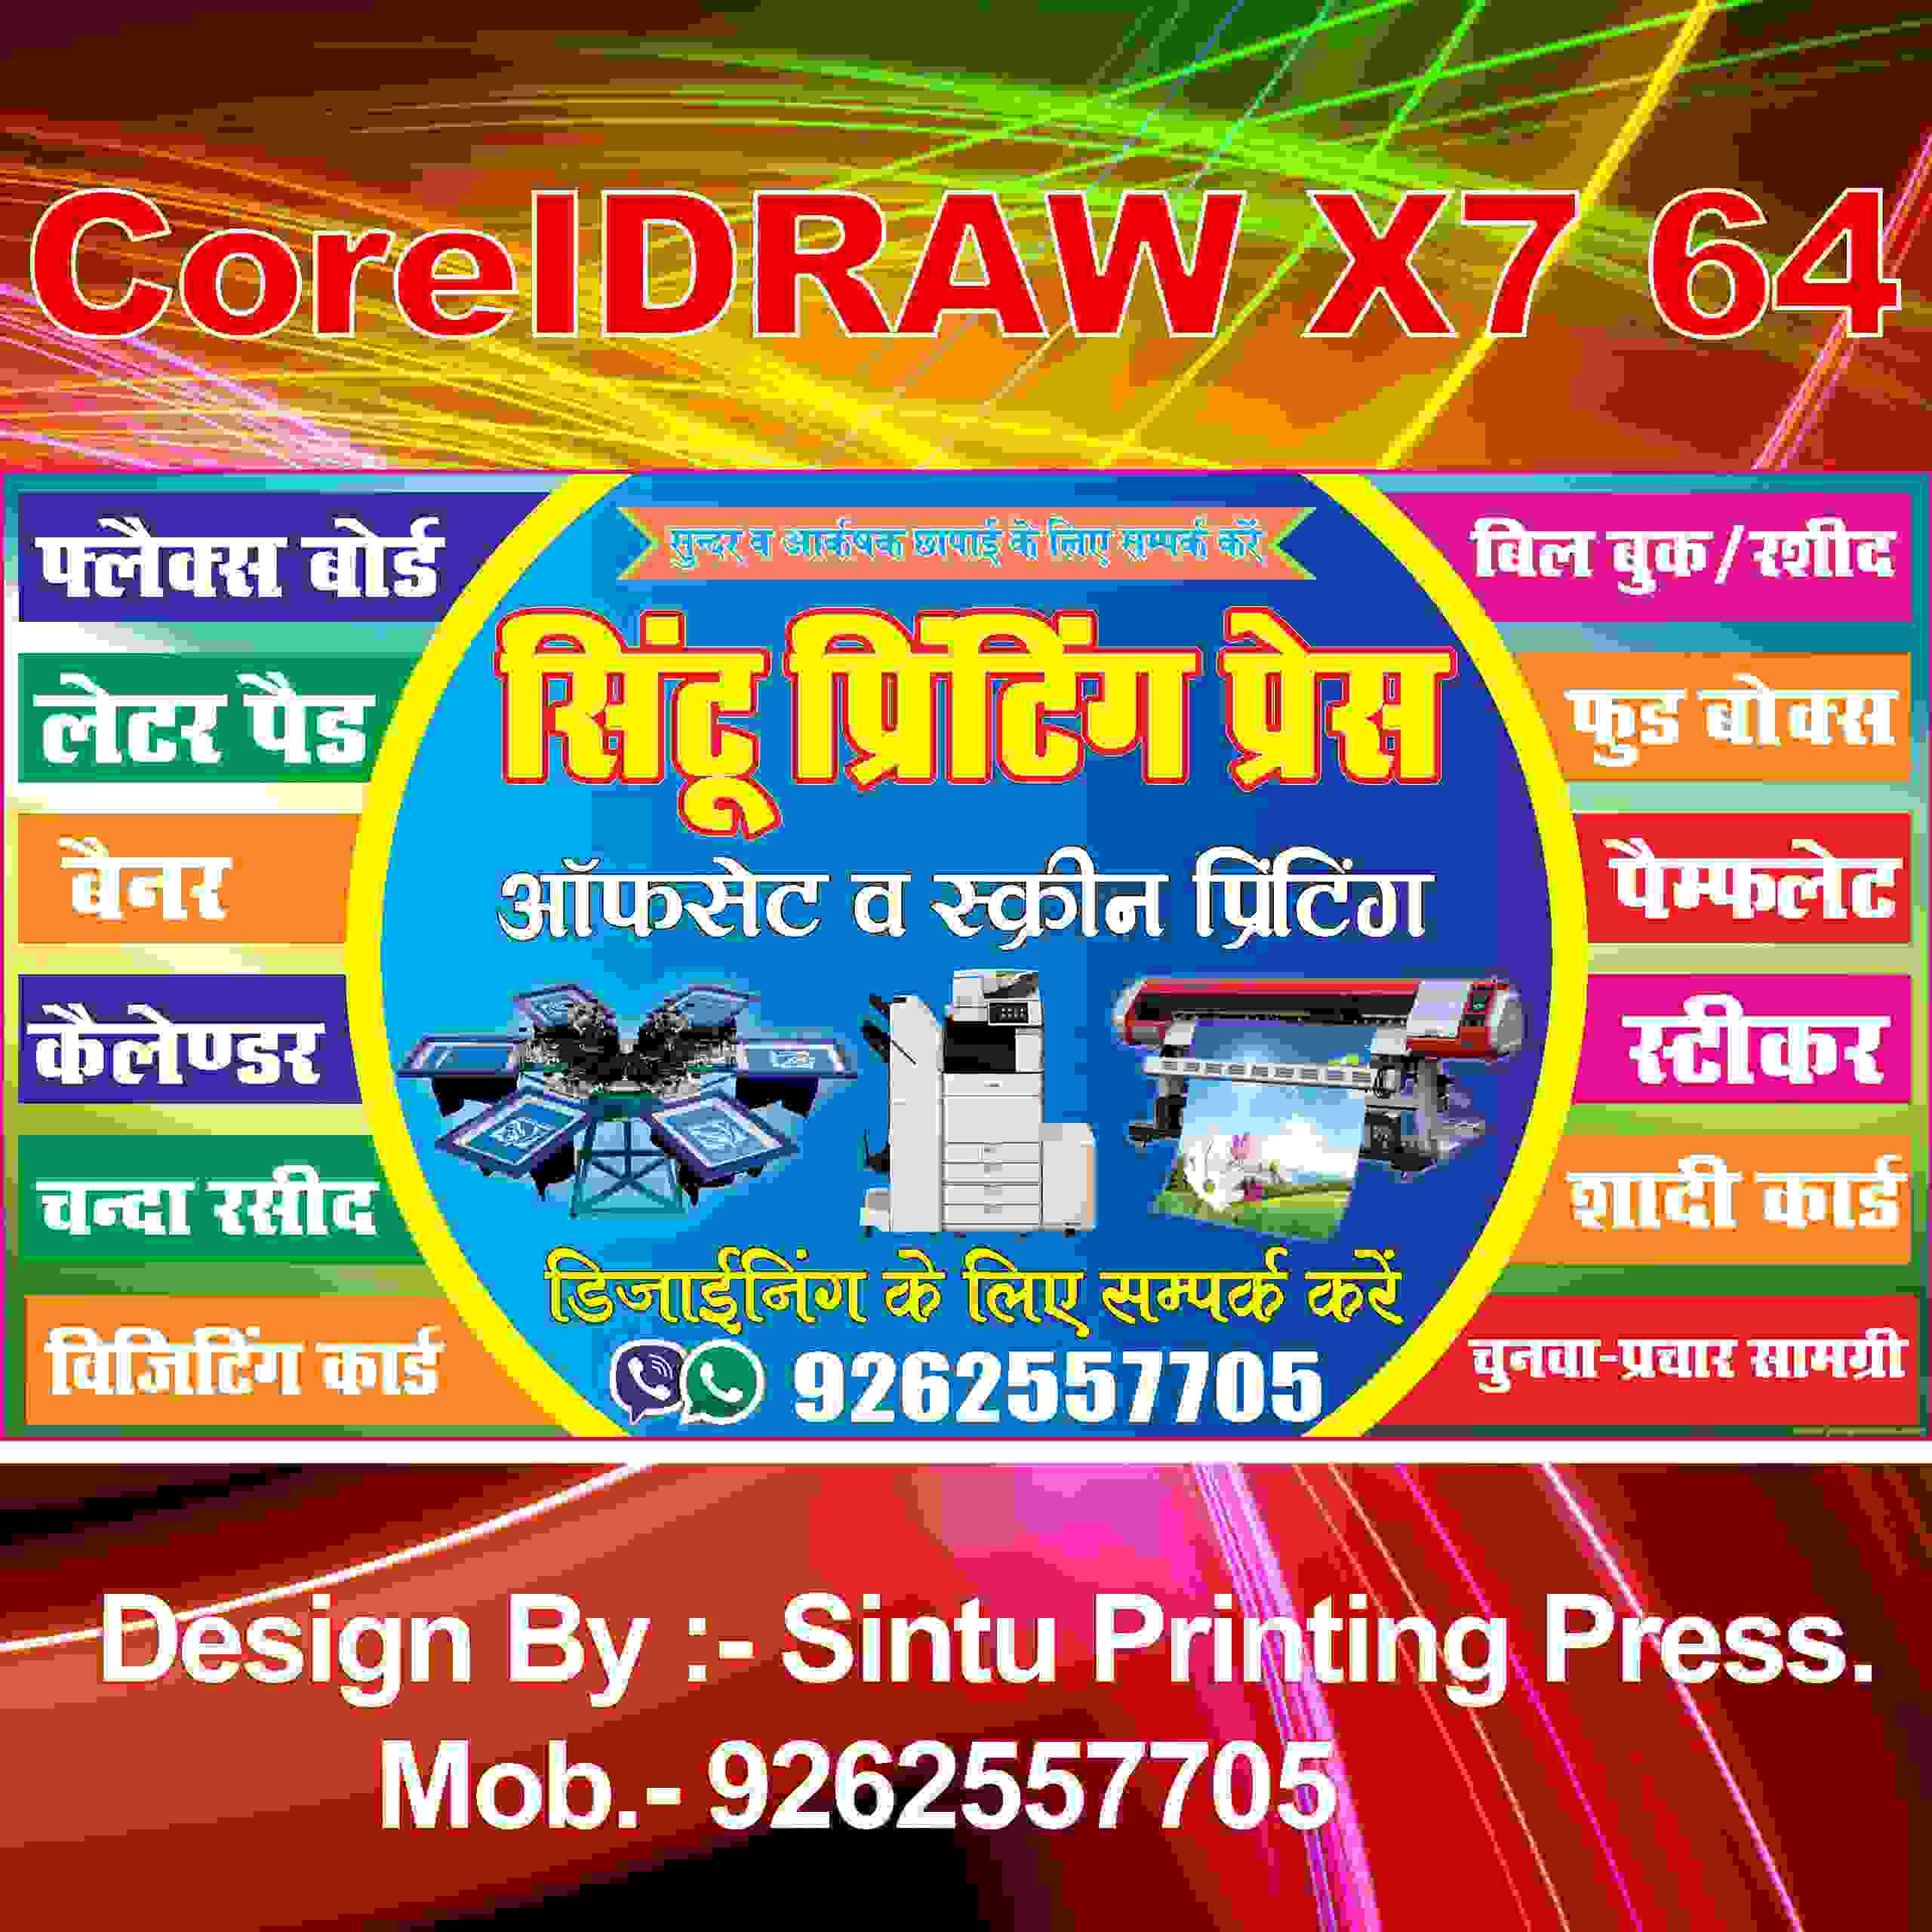 Flex Banner Design Printing Press Free Cdr File Downl - vrogue.co